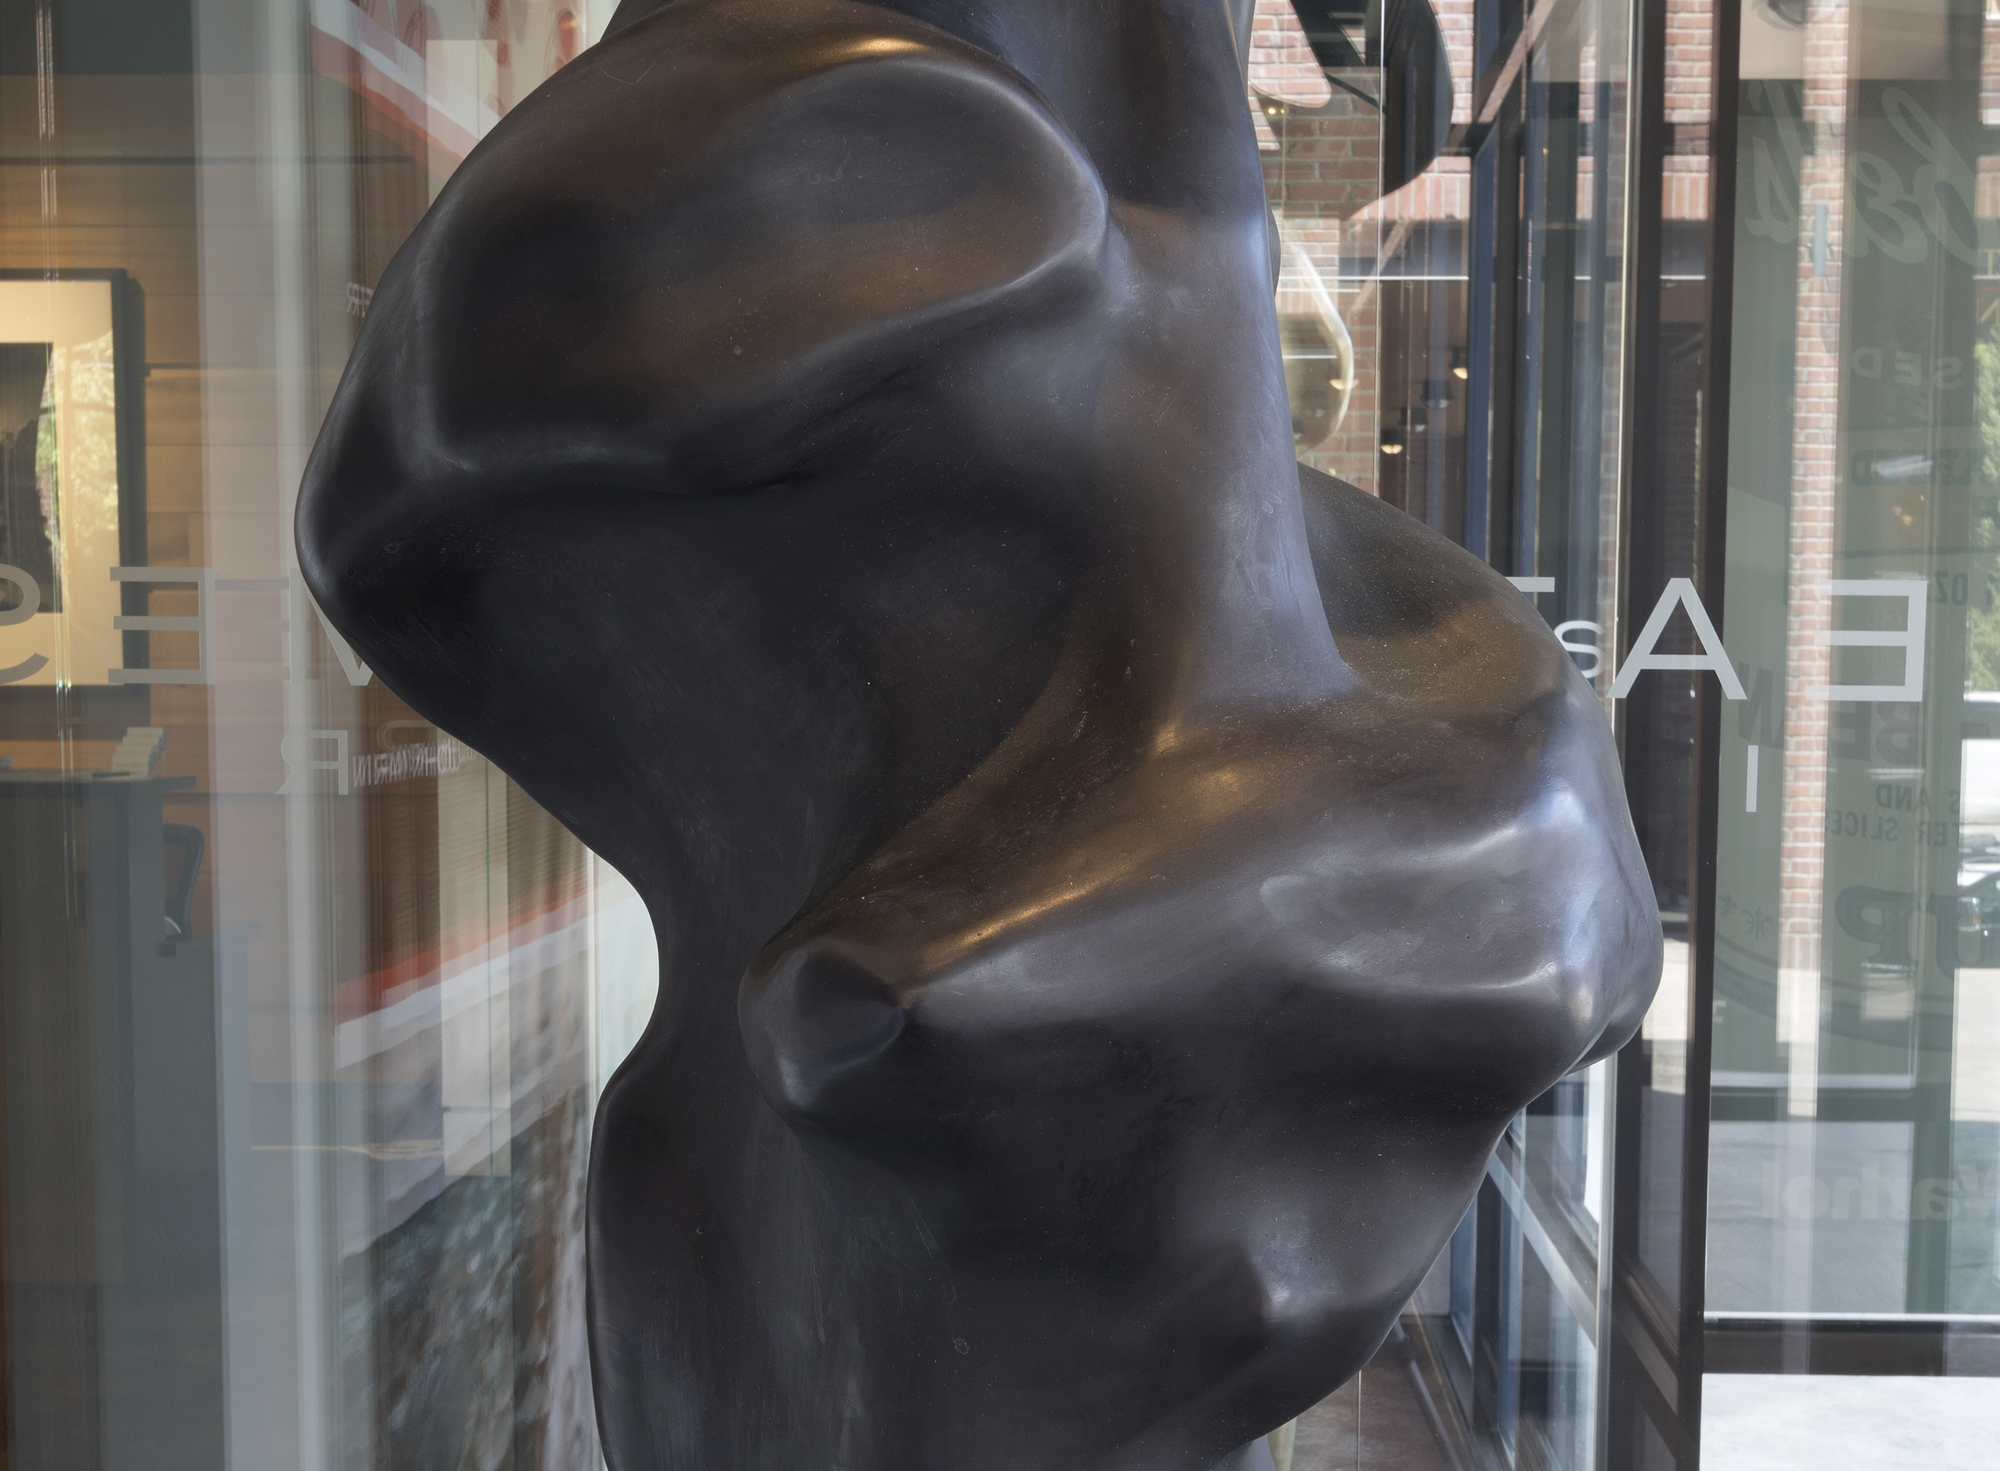 HERB ALPERT - Embrace - bronze with black patina - 83 x 27 x 27 in.